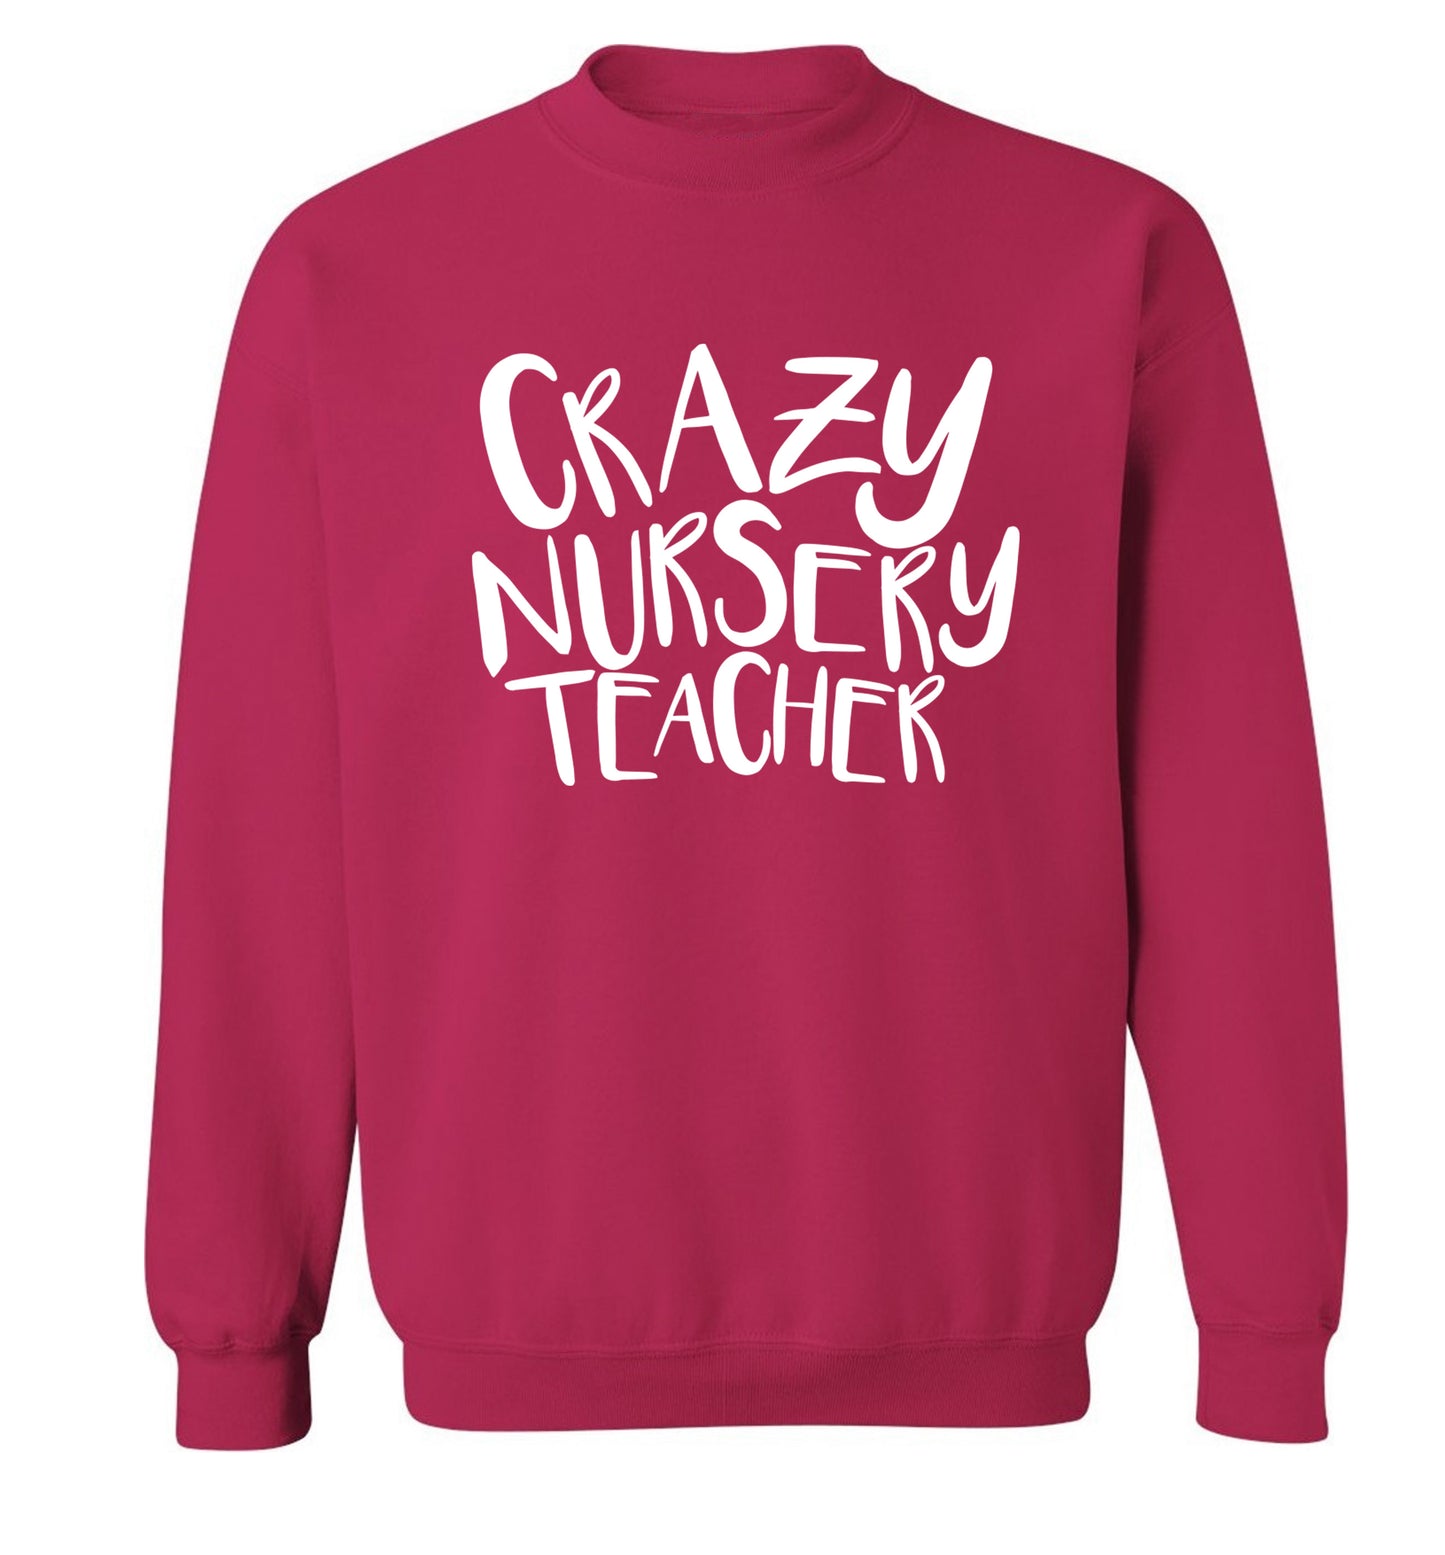 Crazy nursery teacher Adult's unisex pink Sweater 2XL